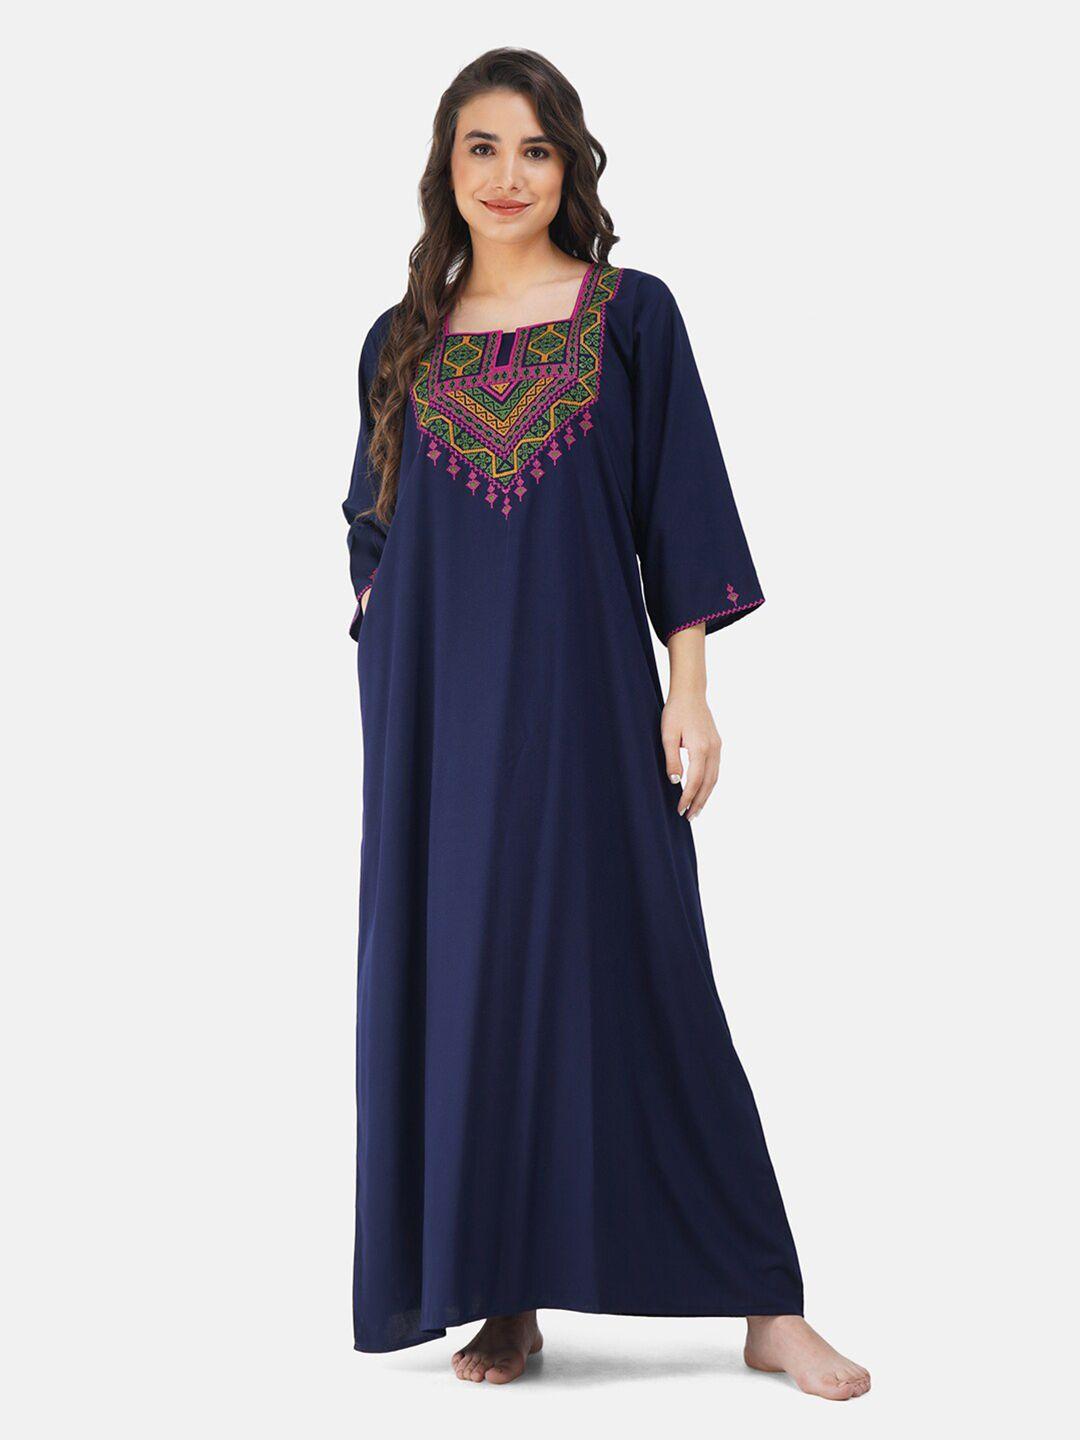 koi-sleepwear-women-navy-blue-embroidered-maxi-nightdress-chatai-full